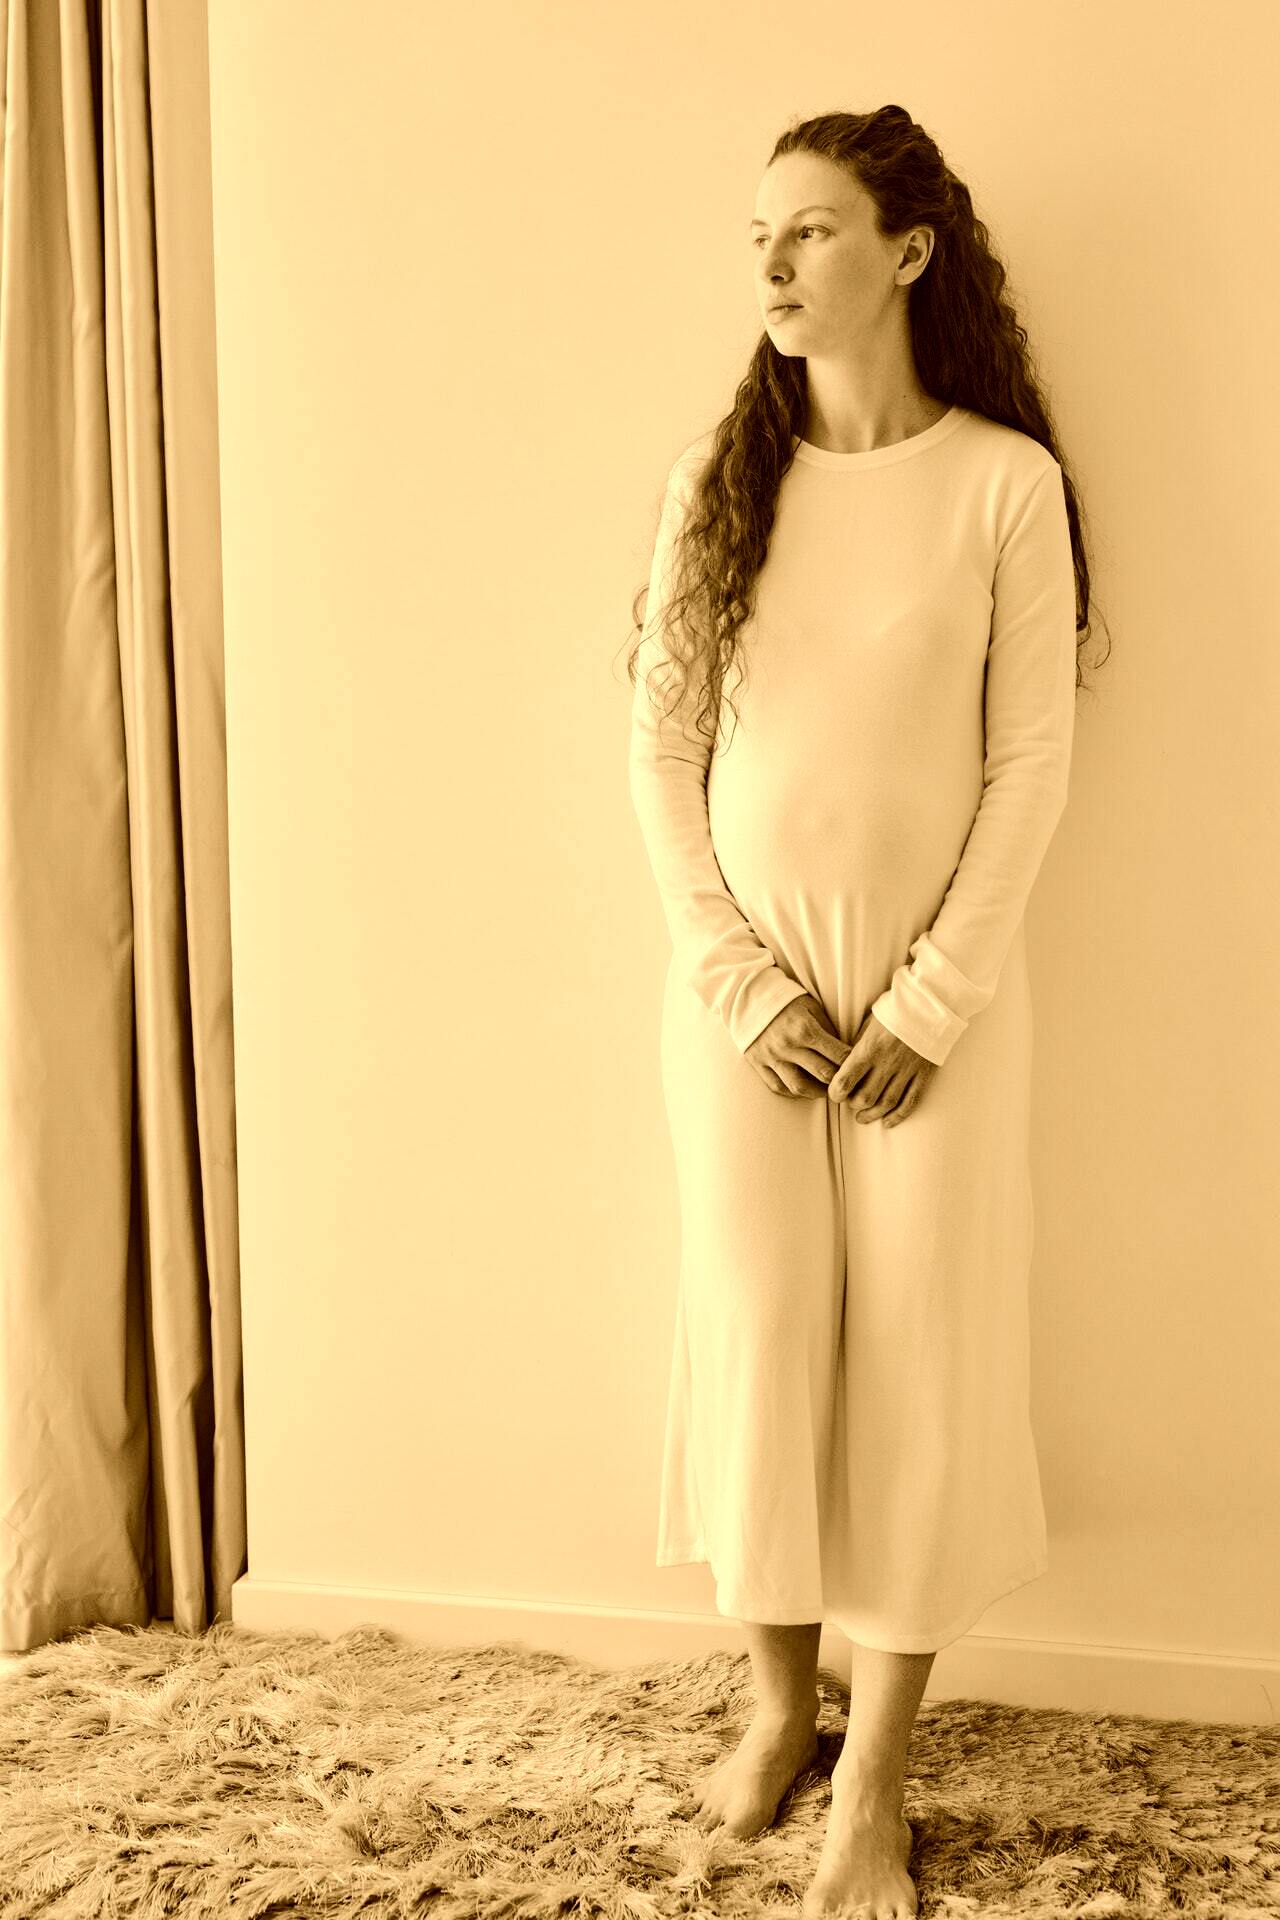 Laura got pregnant as a teenager. | Source: Pexels